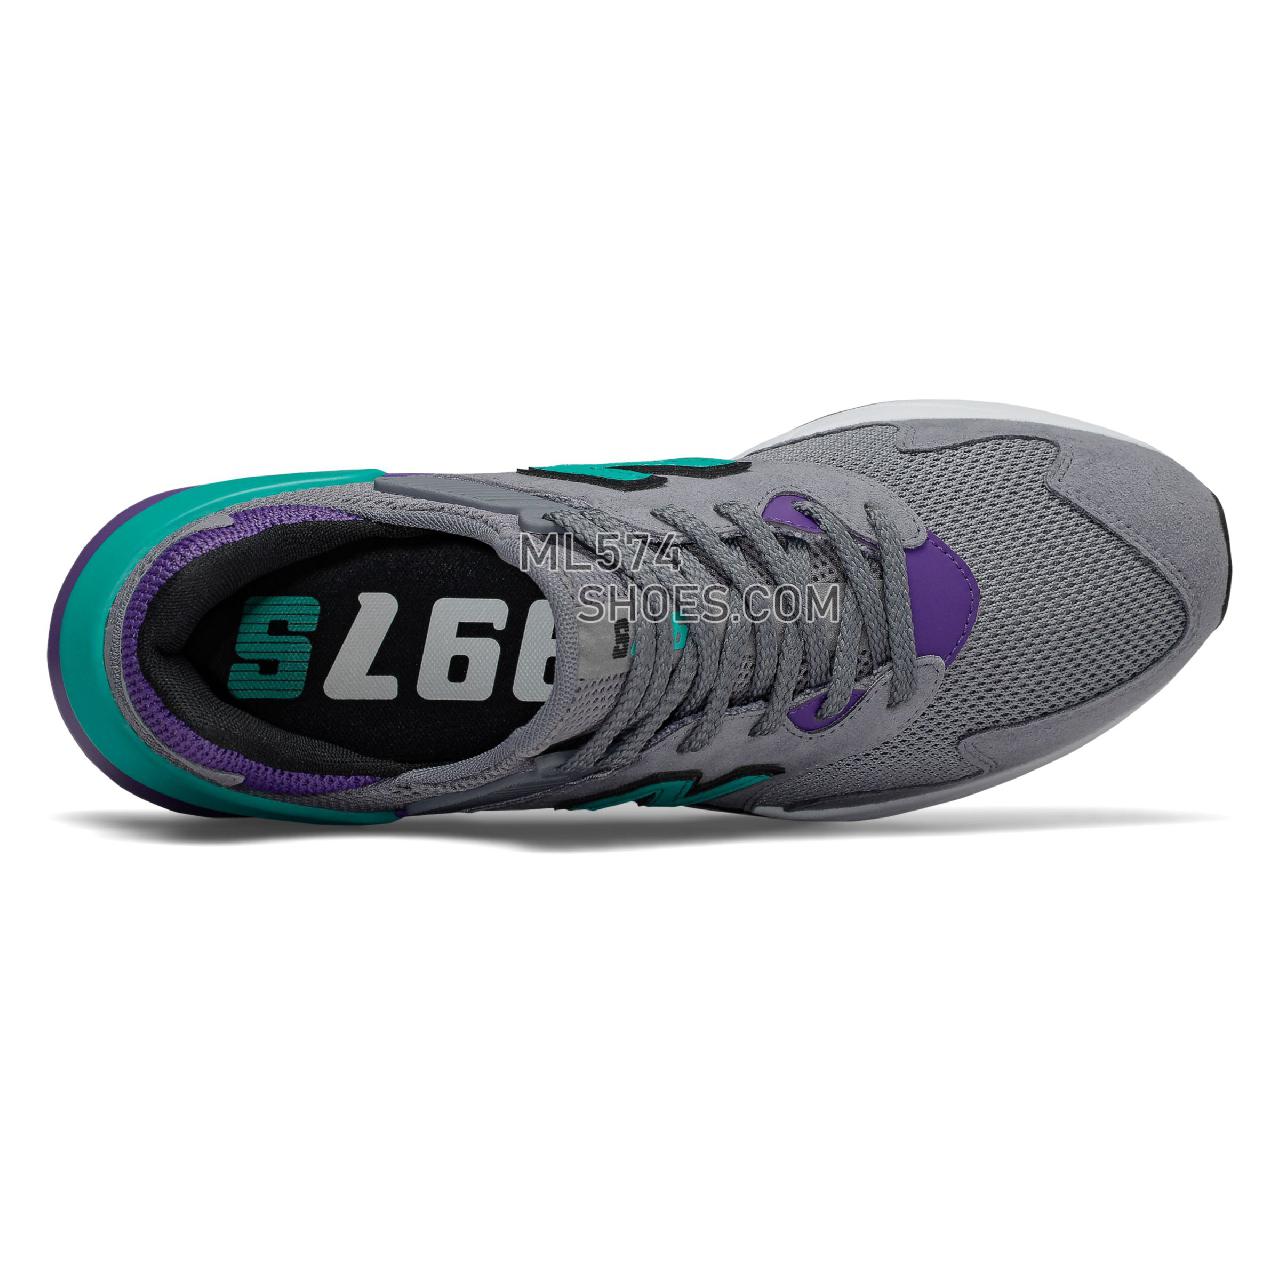 New Balance 997 Sport - Men's Sport Style Sneakers - Steel with Verdite - MS997JKC